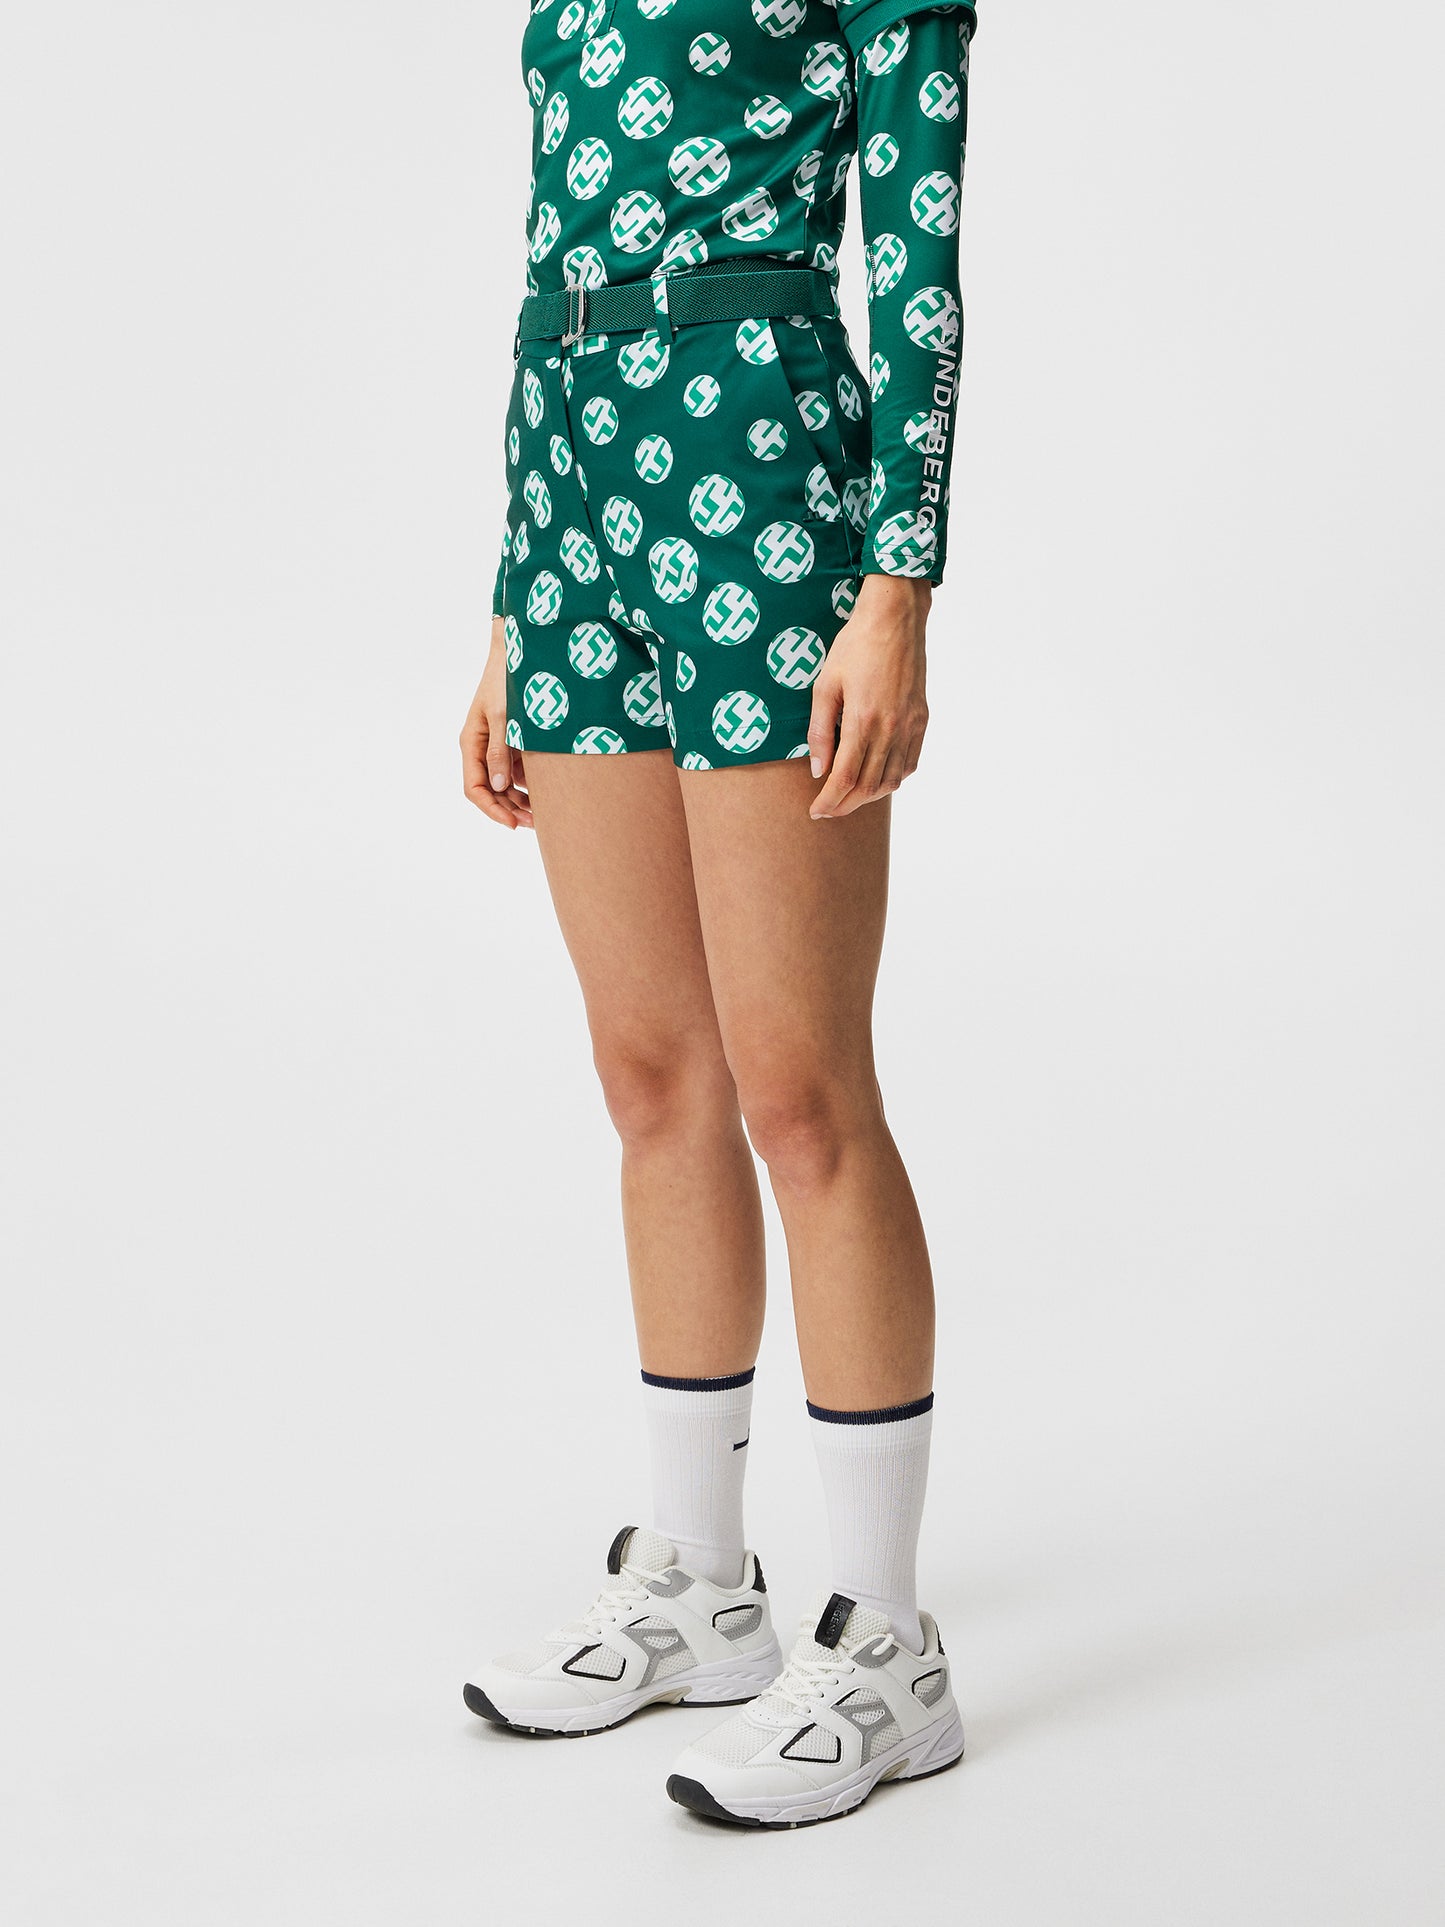 Gwen Printed Shorts / Rain Forest Sphere Dot